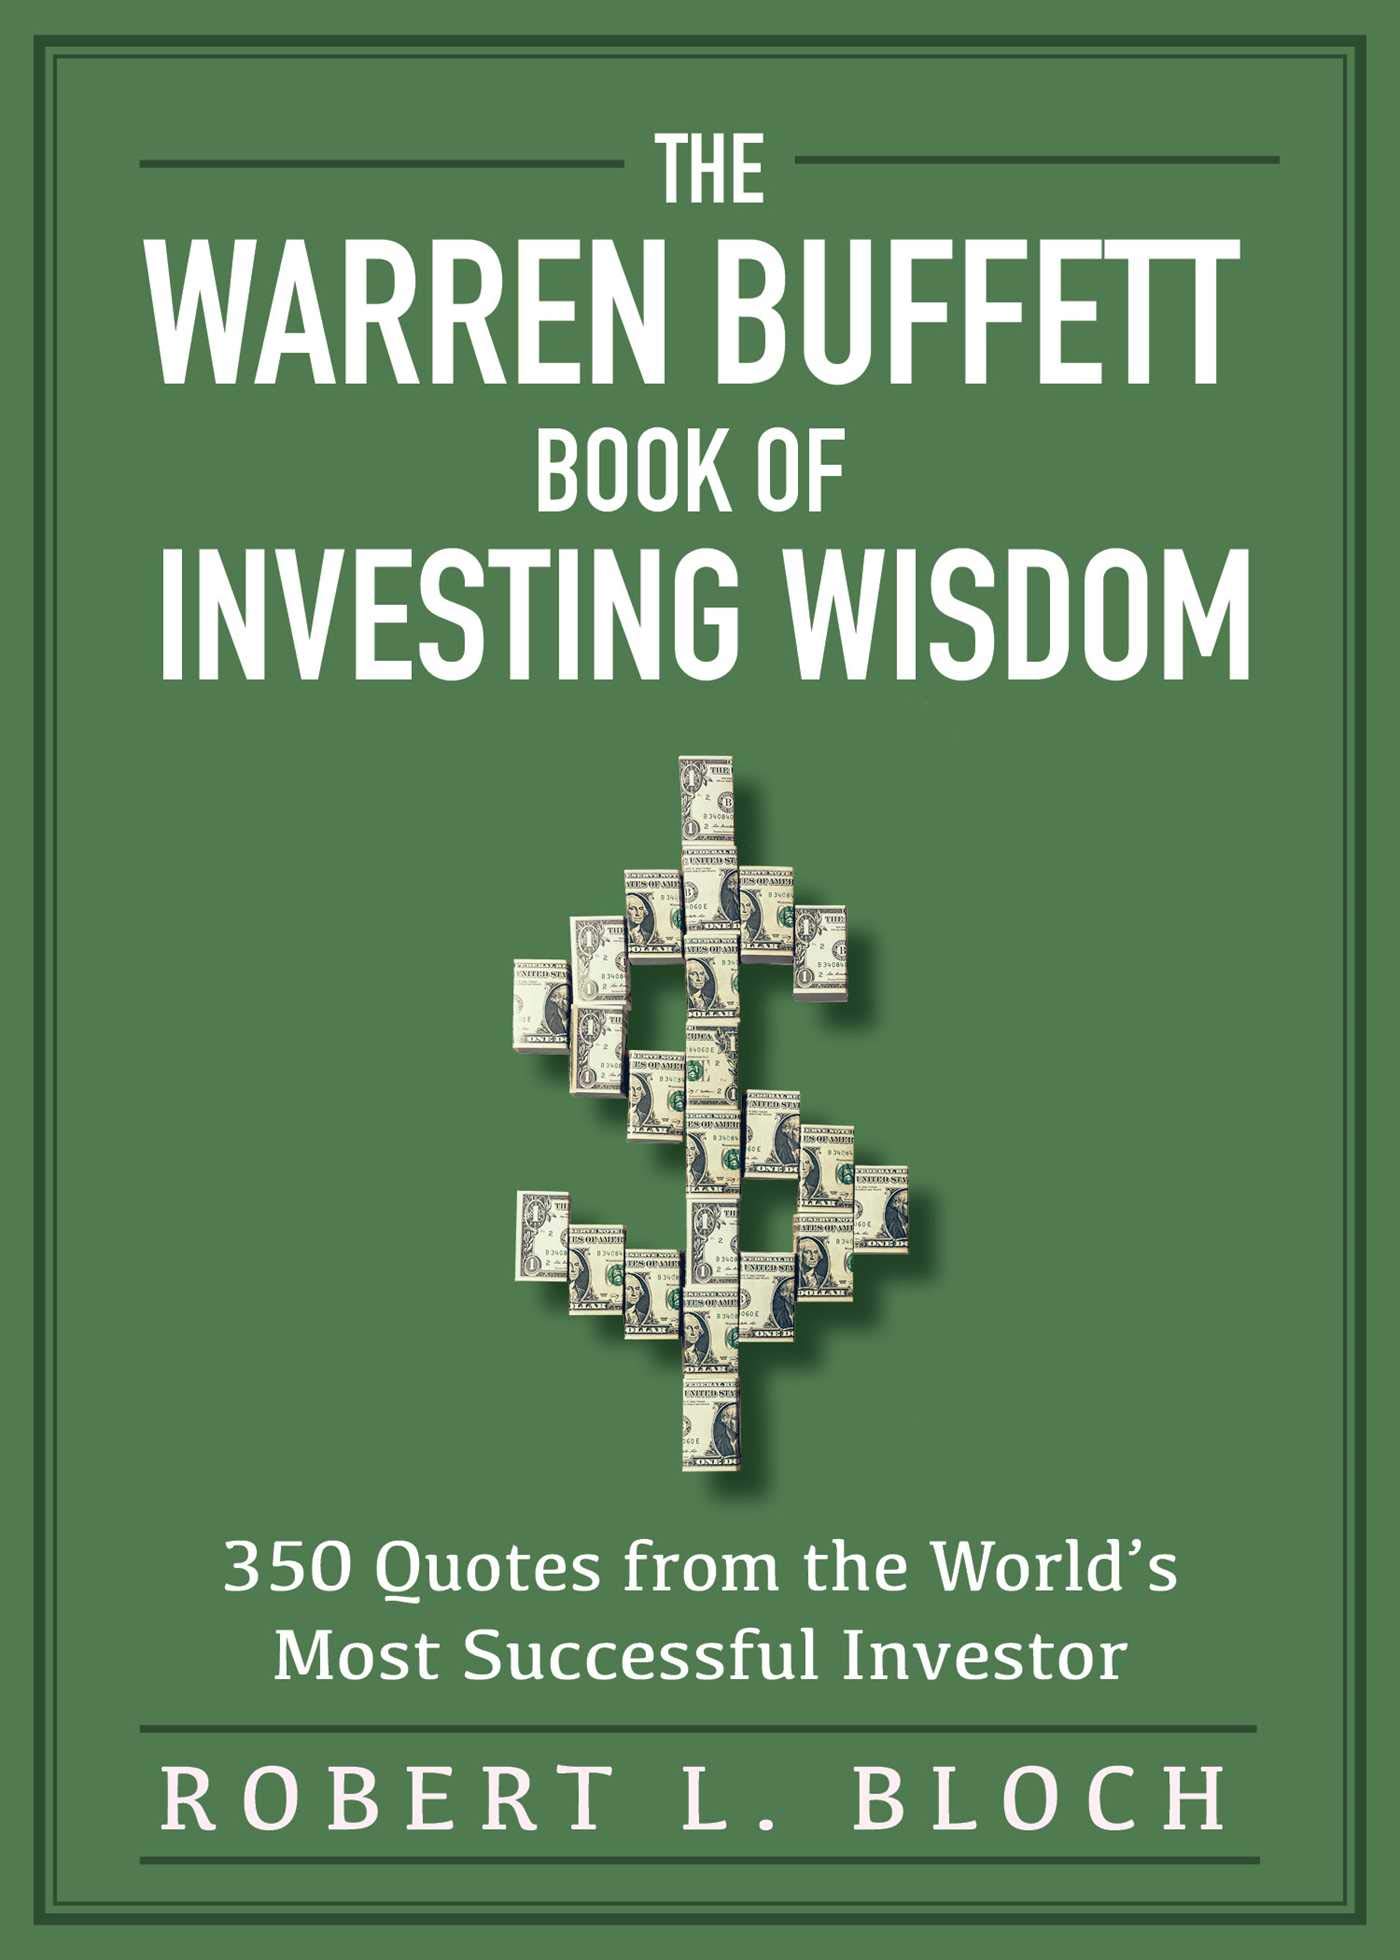 Warren buffett investing books saham forex malaysia group